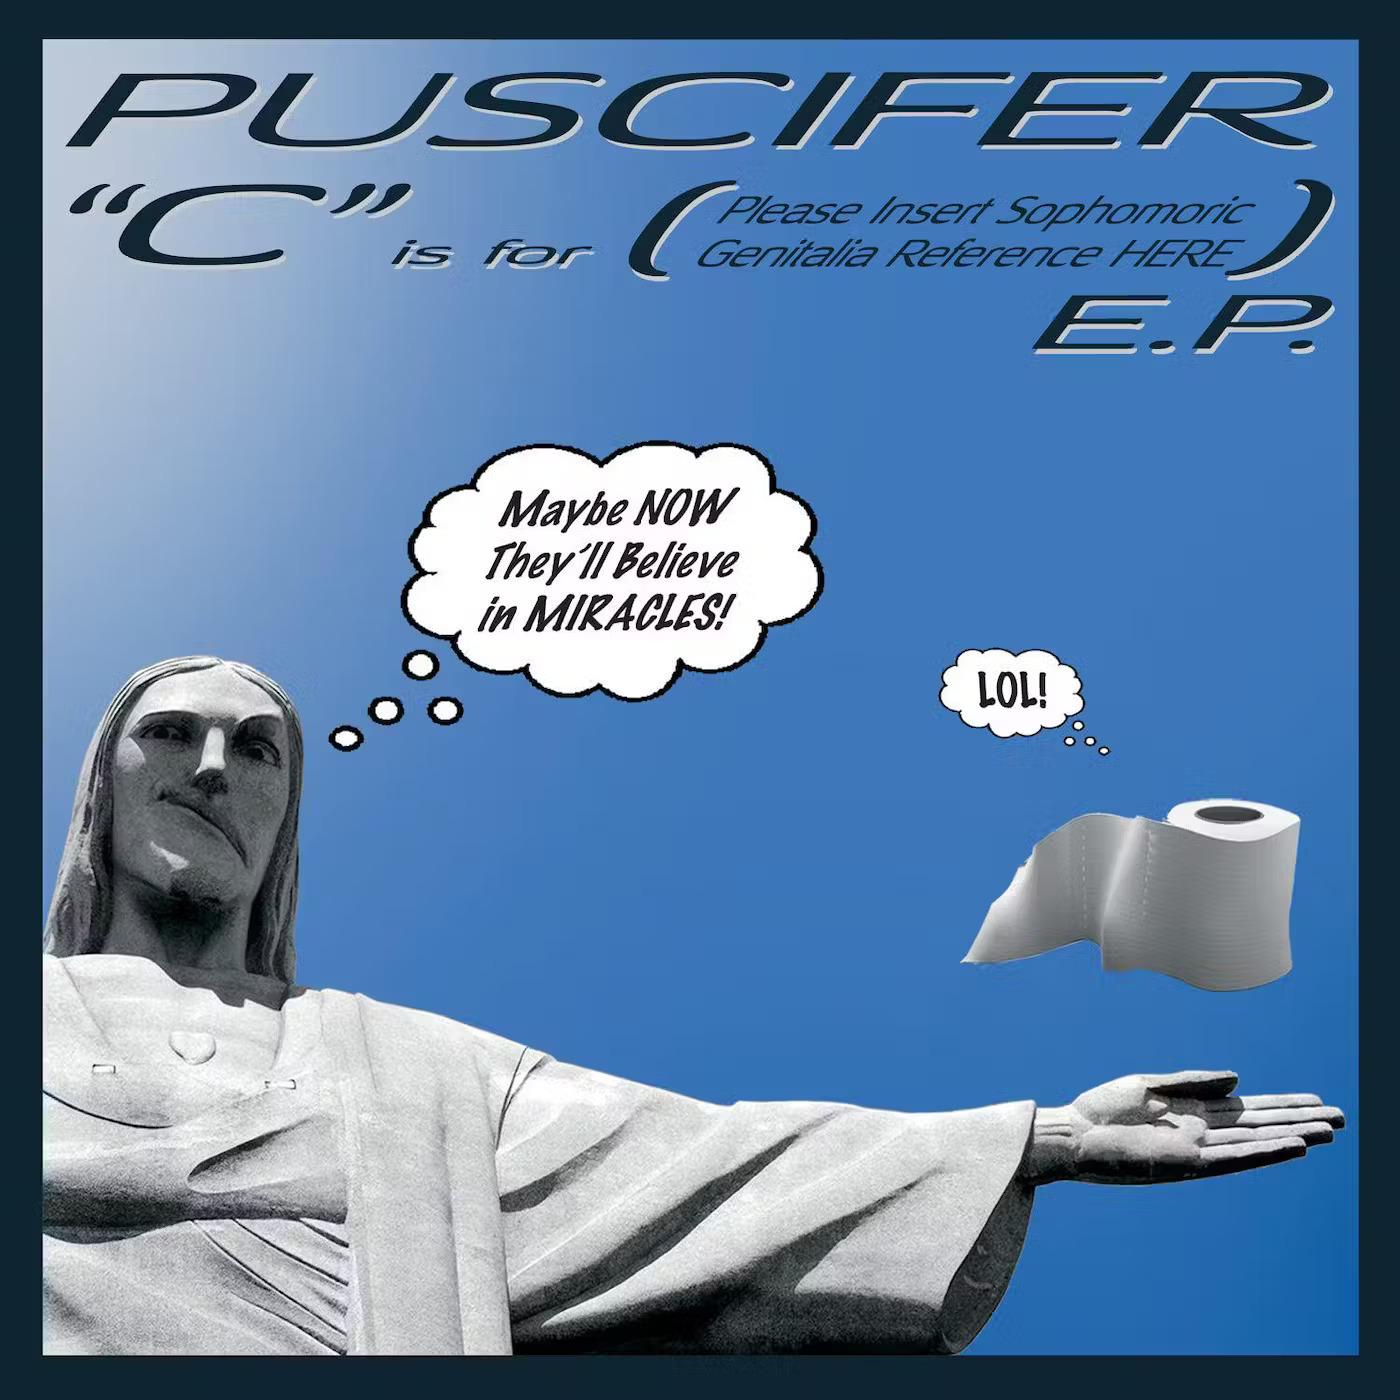 Виниловая пластинка Puscifer, "C" Is For (Please Insert Sophomoric Genitalia Reference Here) EP (4050538622492)